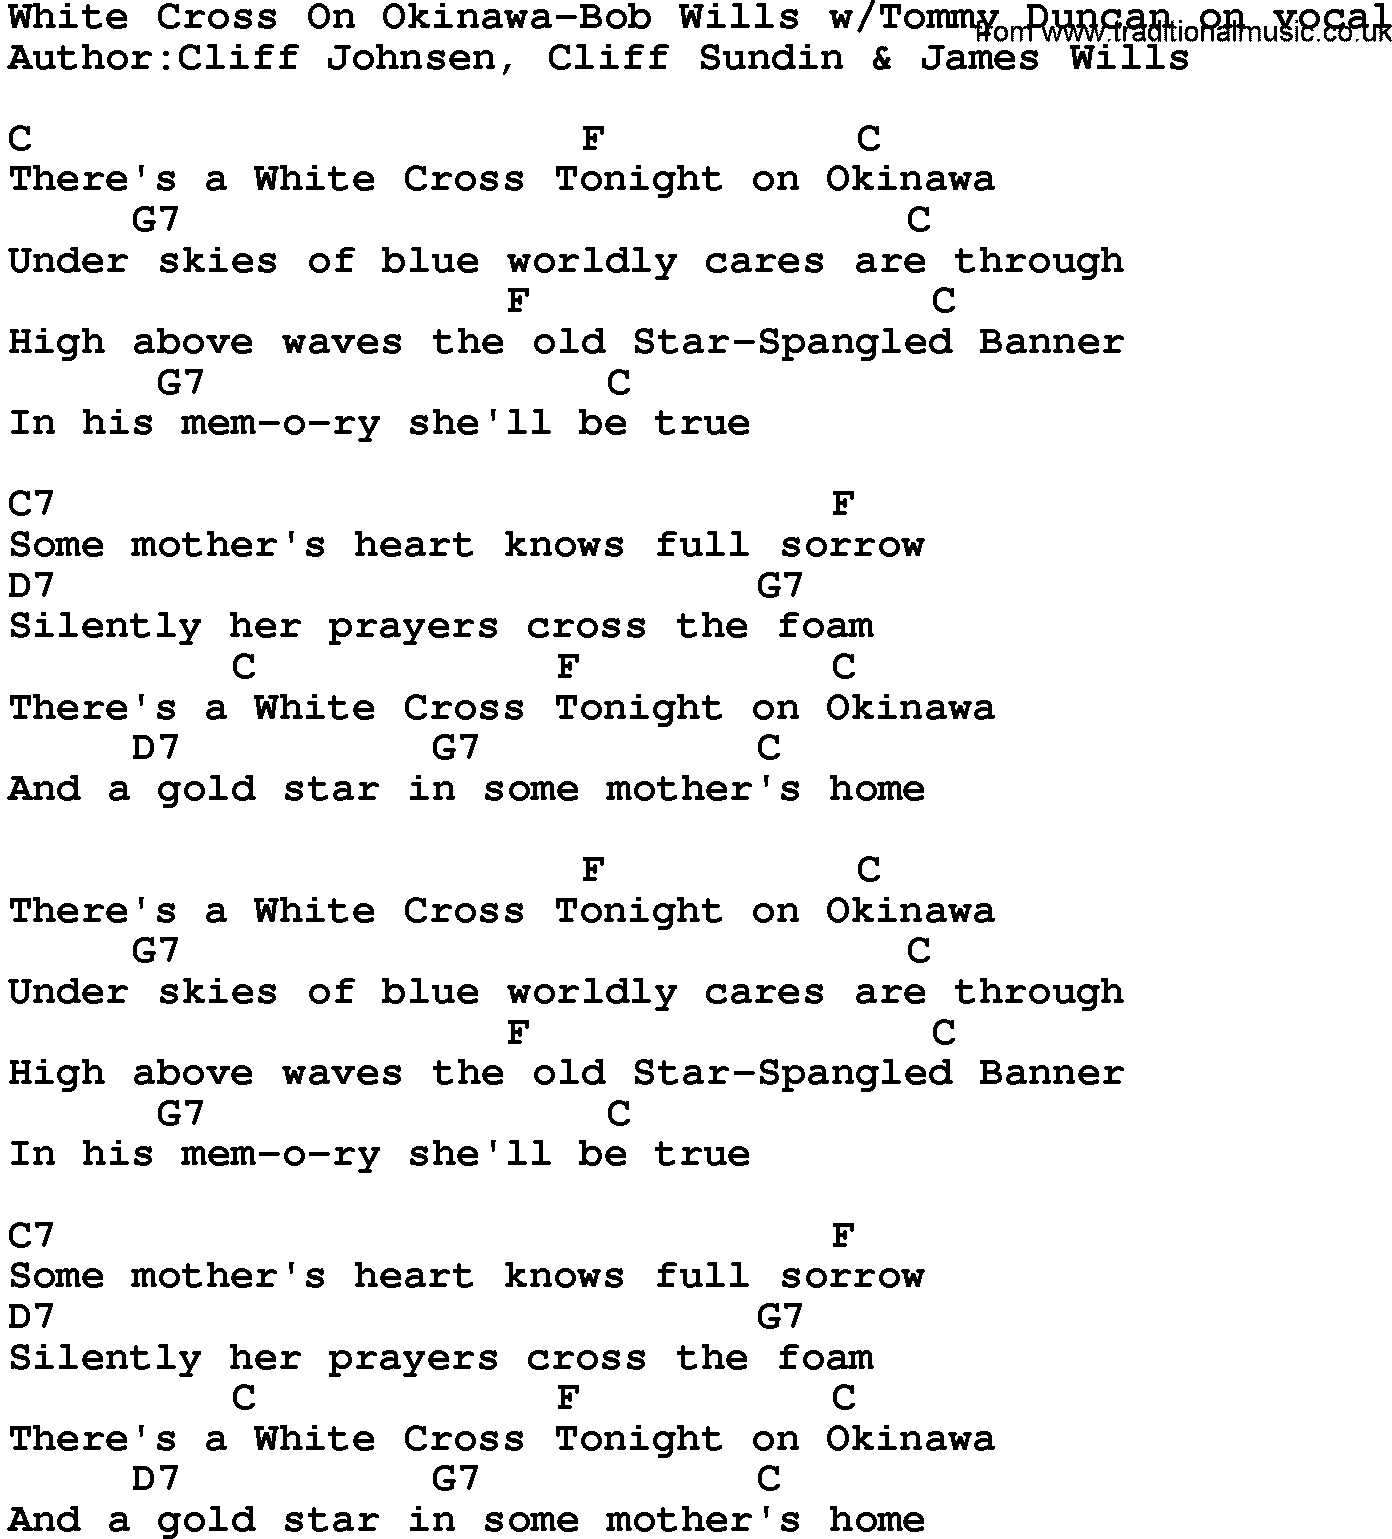 Country music song: White Cross On Okinawa-Bob Wills lyrics and chords